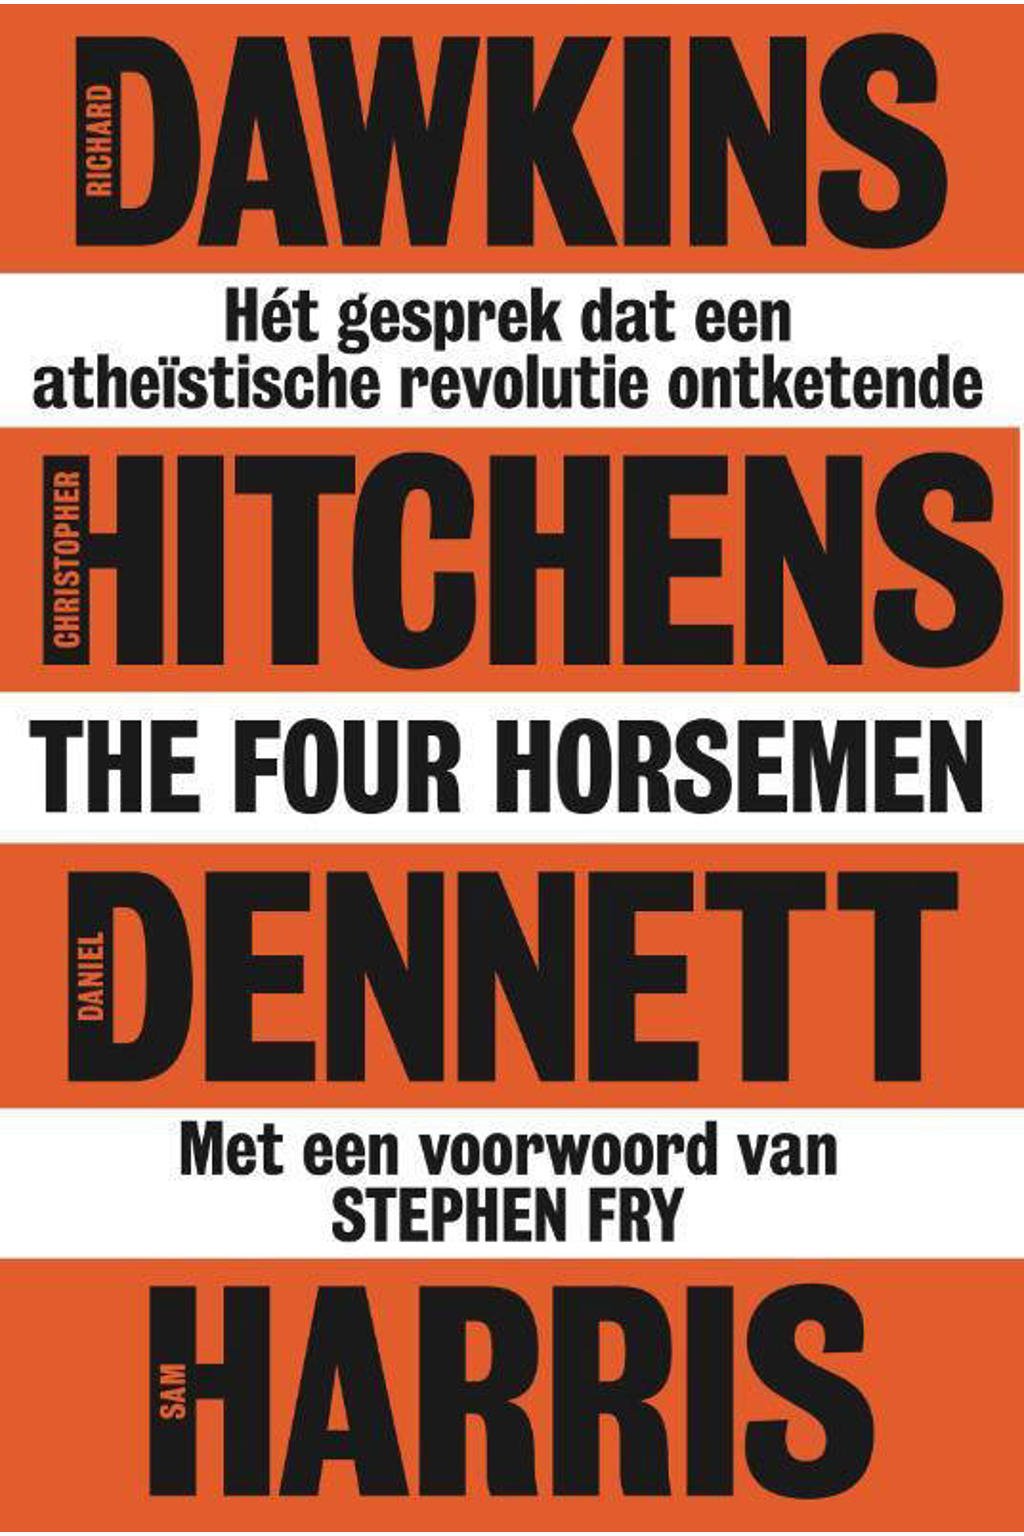 The Four Horsemen - Richard Dawkins, Christopher Hitchens, Daniel Dennett, e.a.